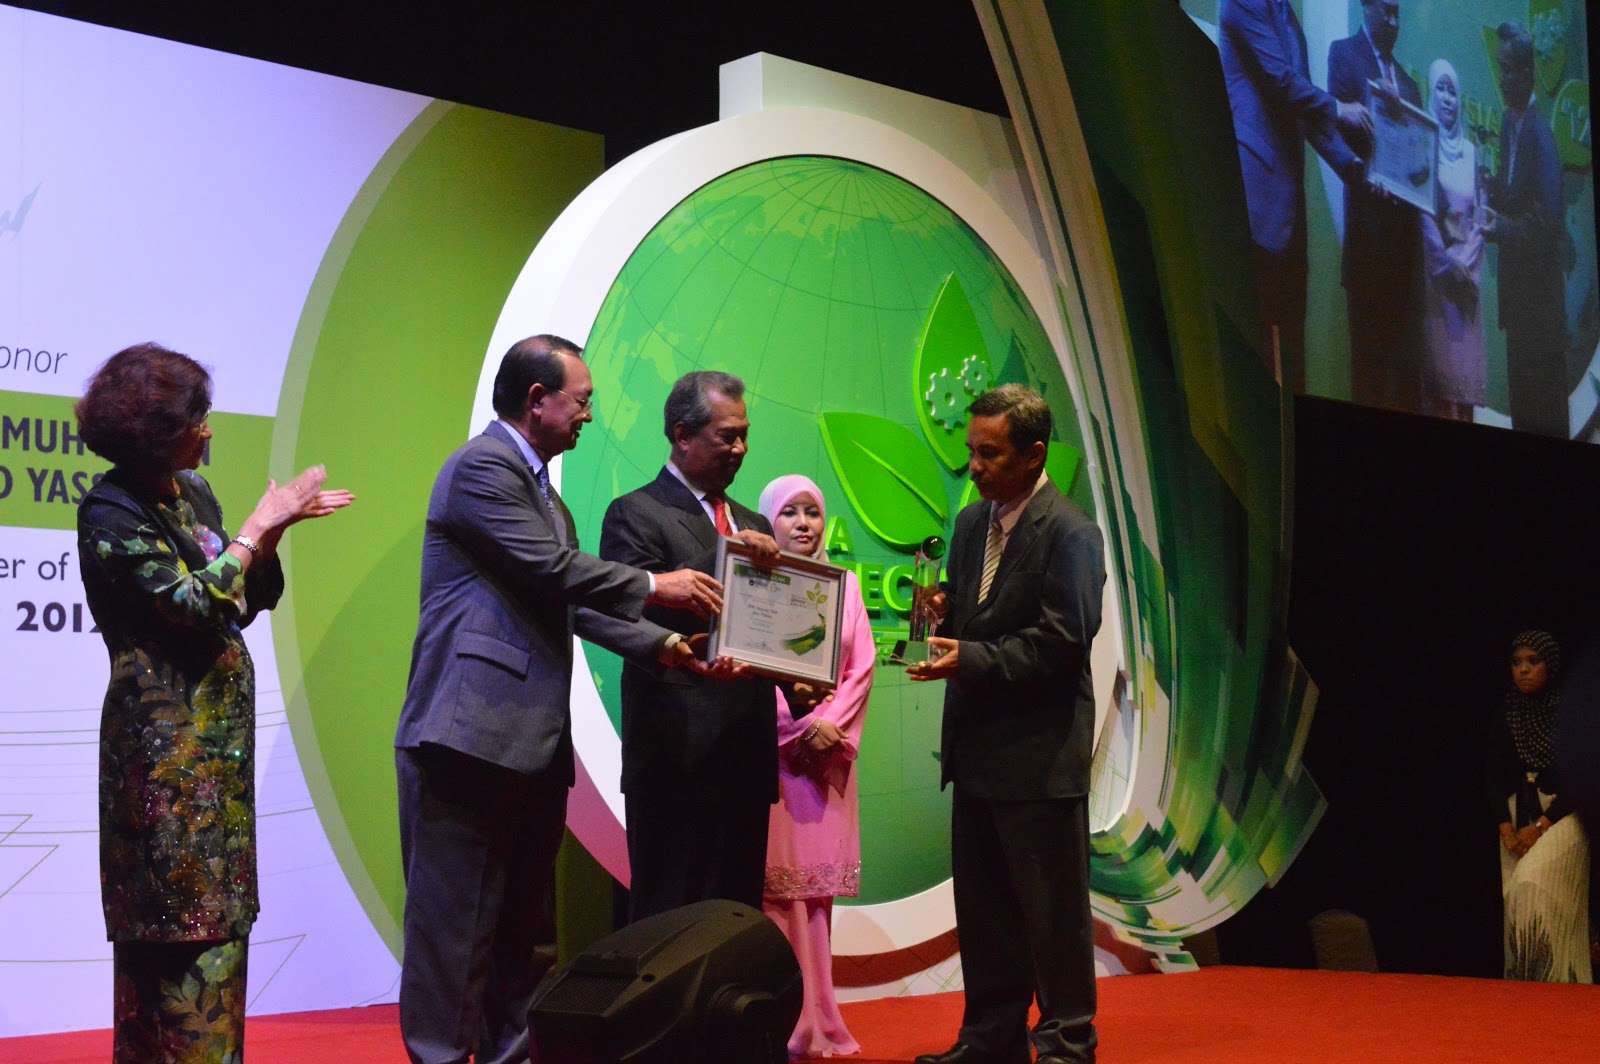 Zolkaplyyunus: SMK Iskandar Shah Menang Anugerah Platinum 